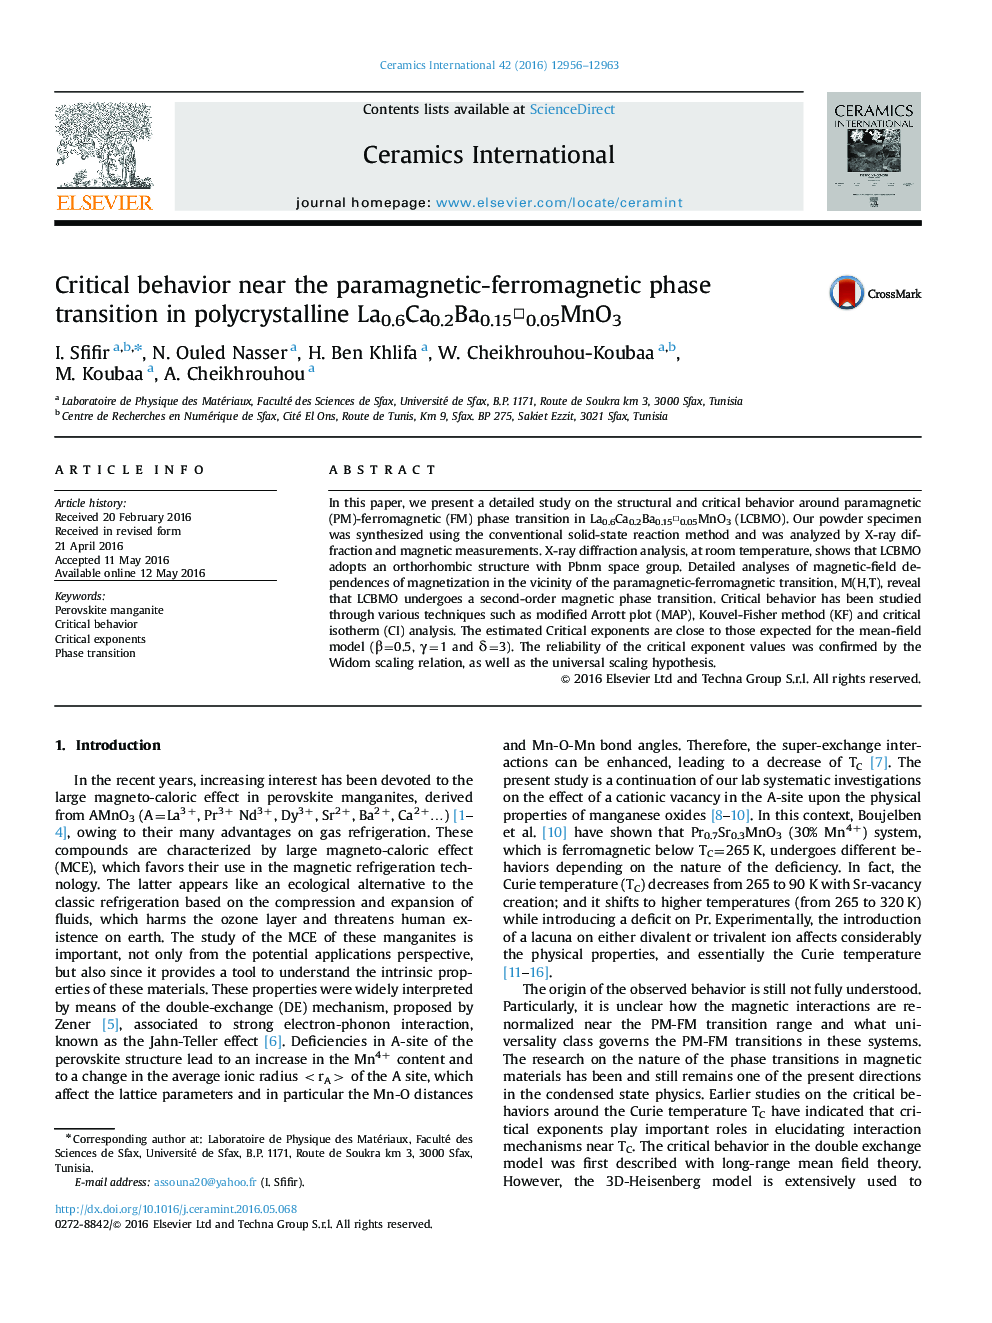 Critical behavior near the paramagnetic-ferromagnetic phase transition in polycrystalline La0.6Ca0.2Ba0.15□0.05MnO3